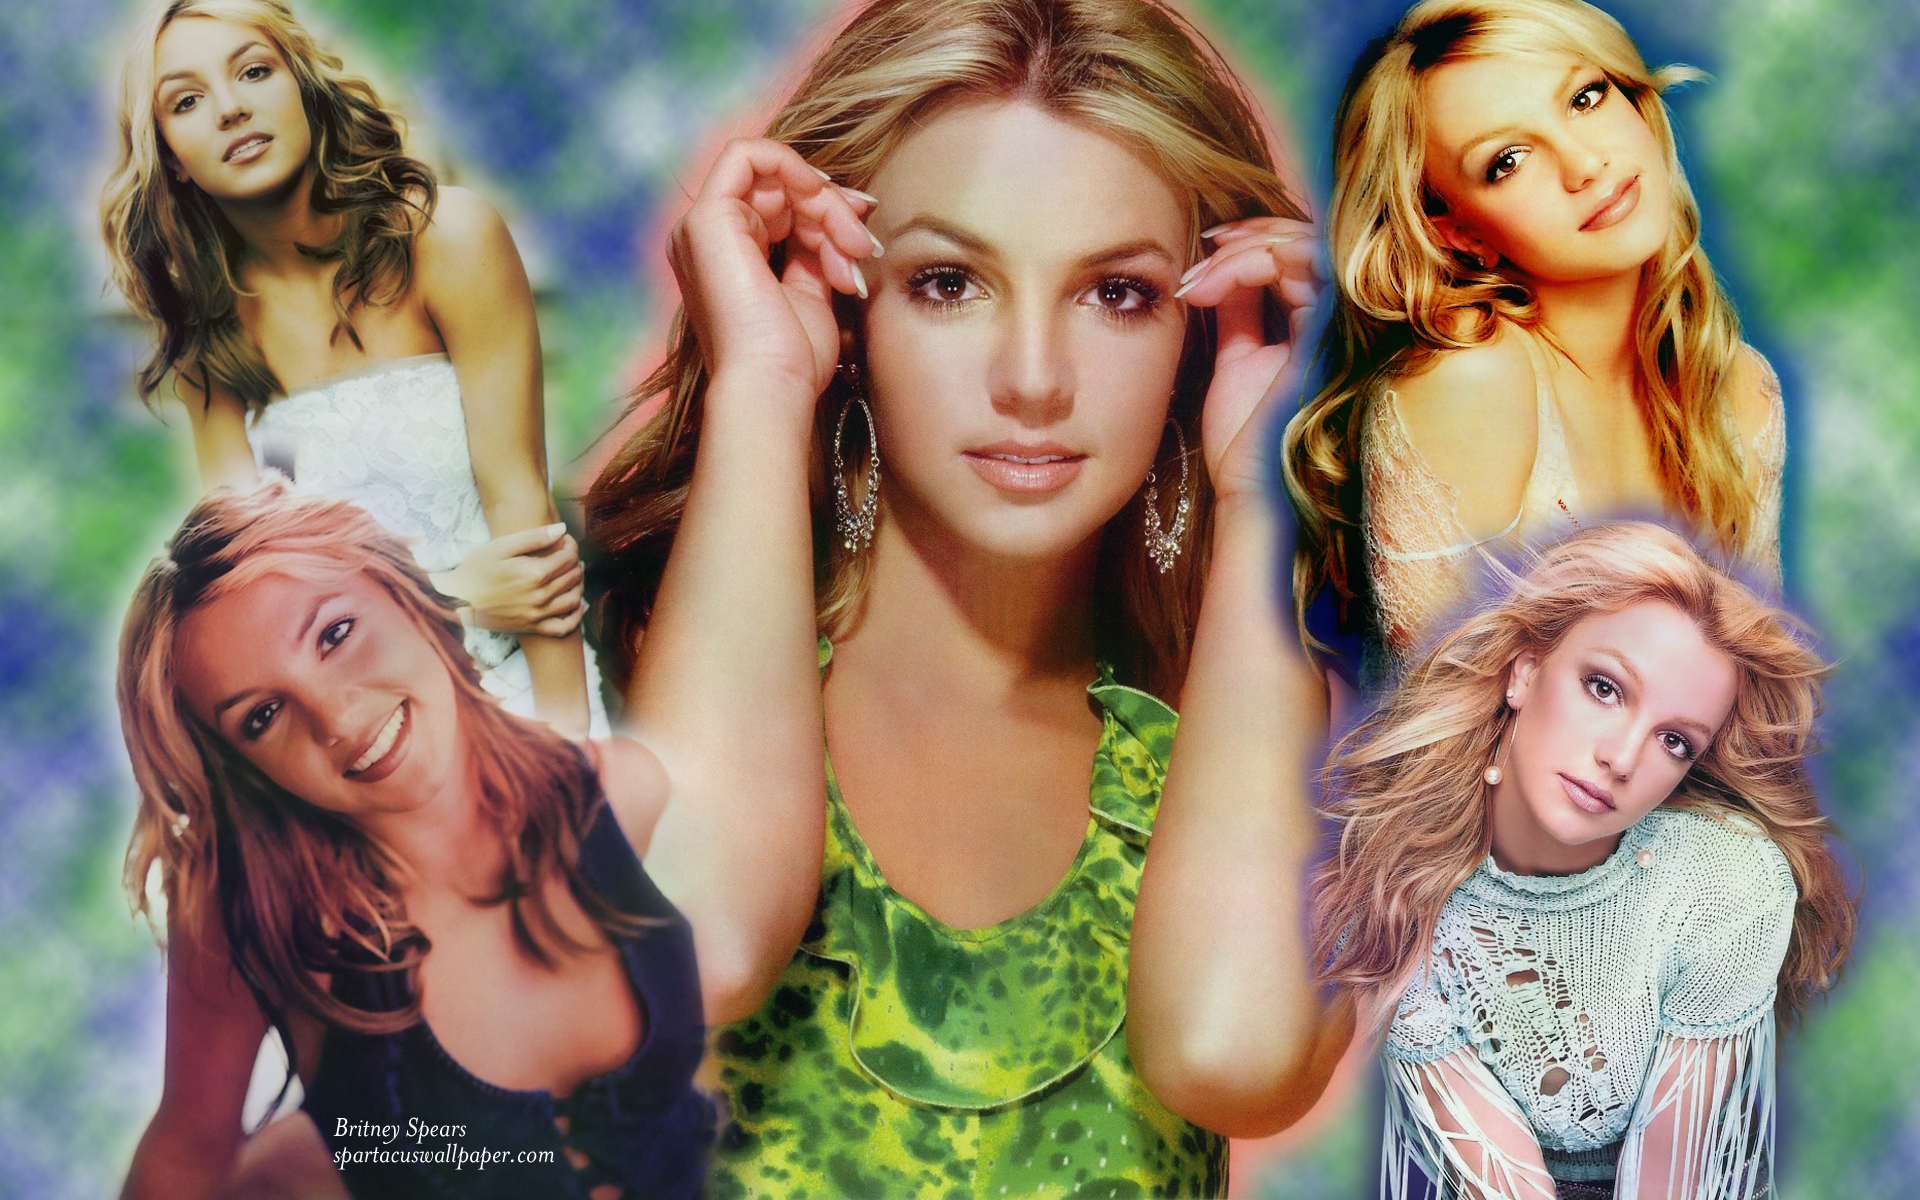 Britney Spears XVII. Desktop Background. Mobile Home Screens